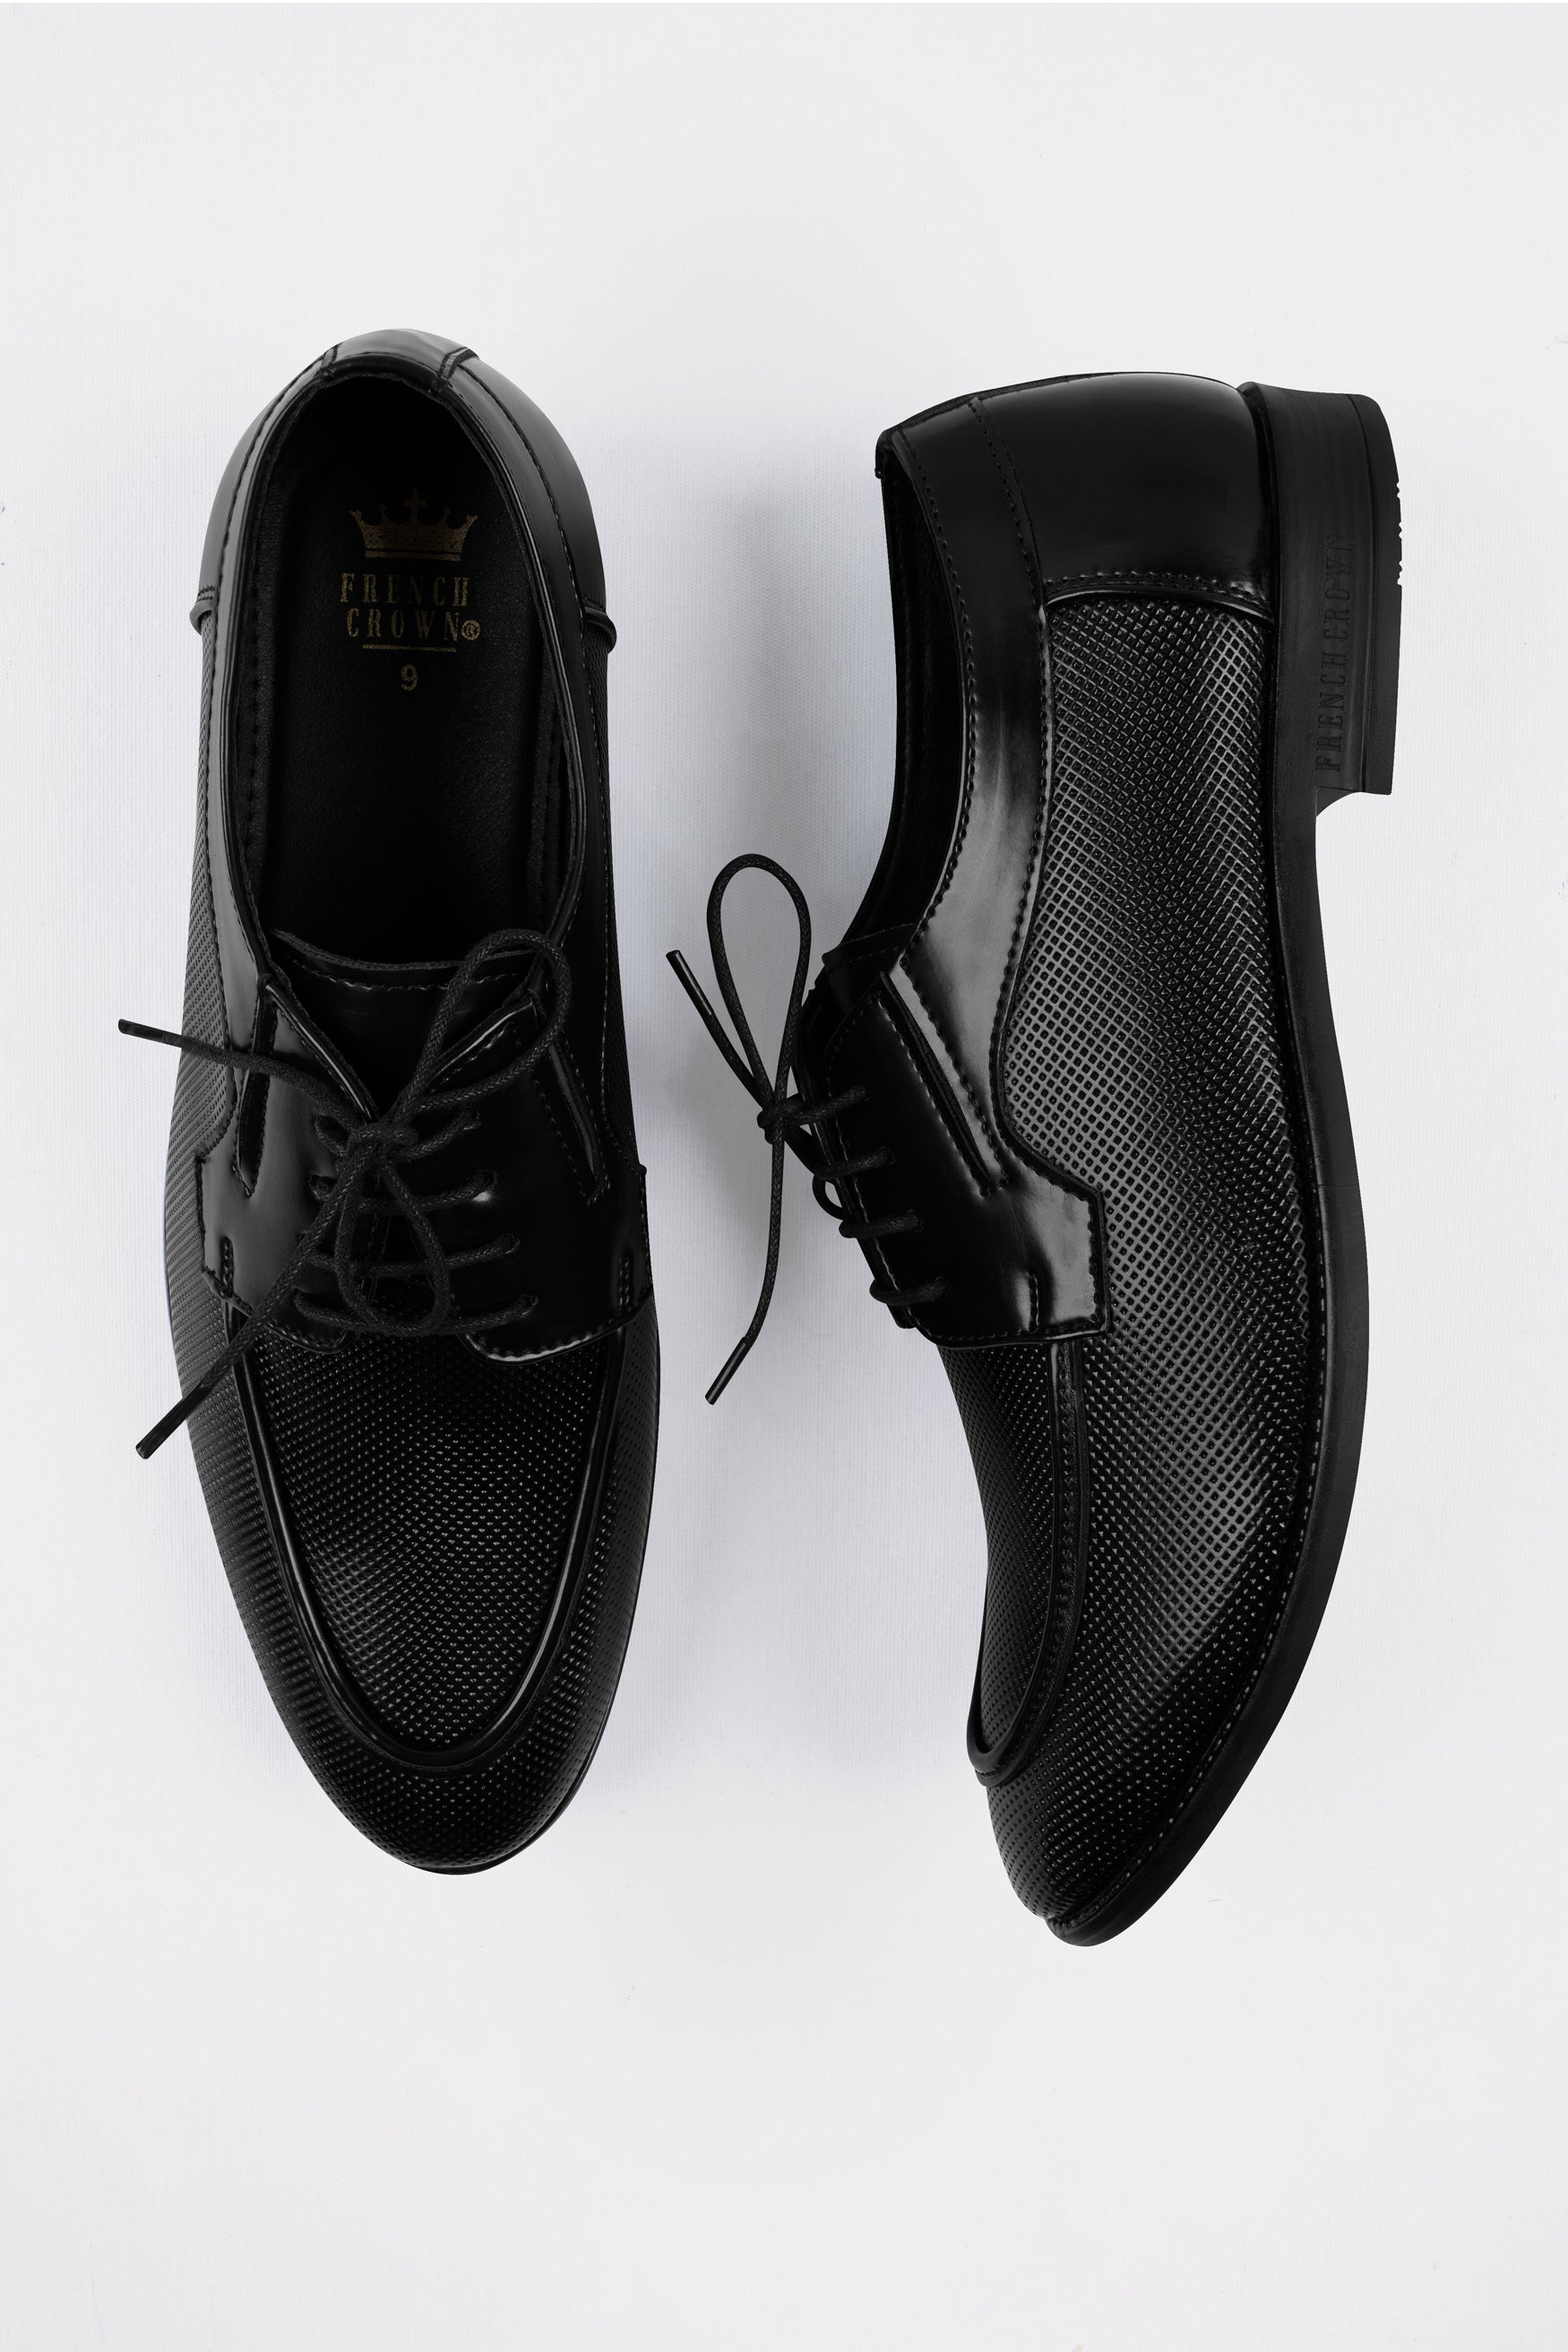 Jade Black Vegan Leather Textured Blucher Shoes